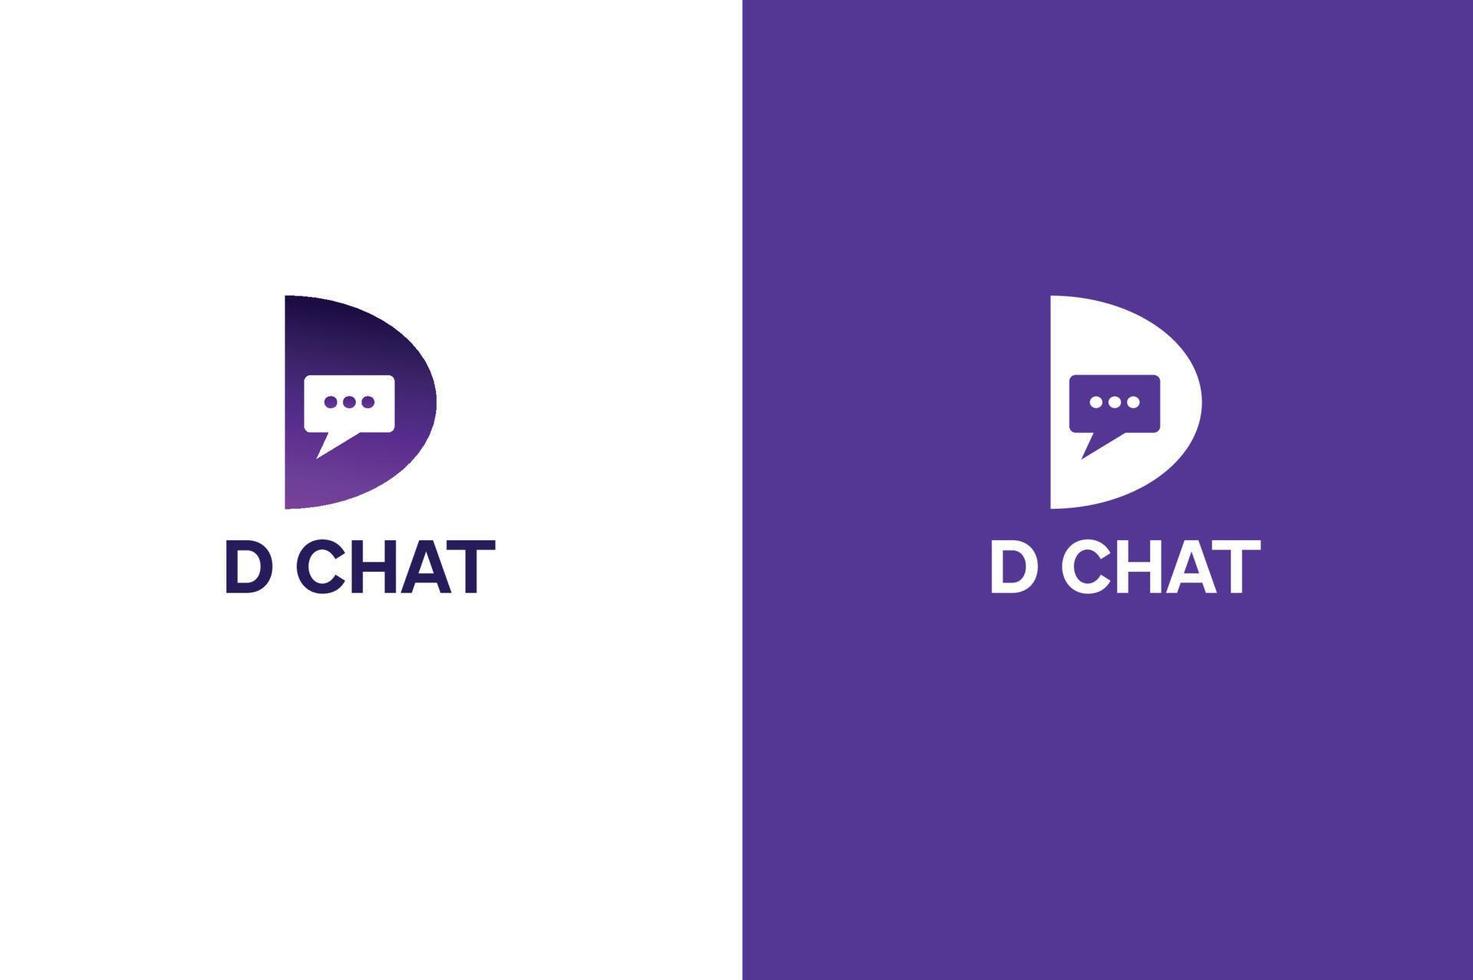 D chat company logo design vector